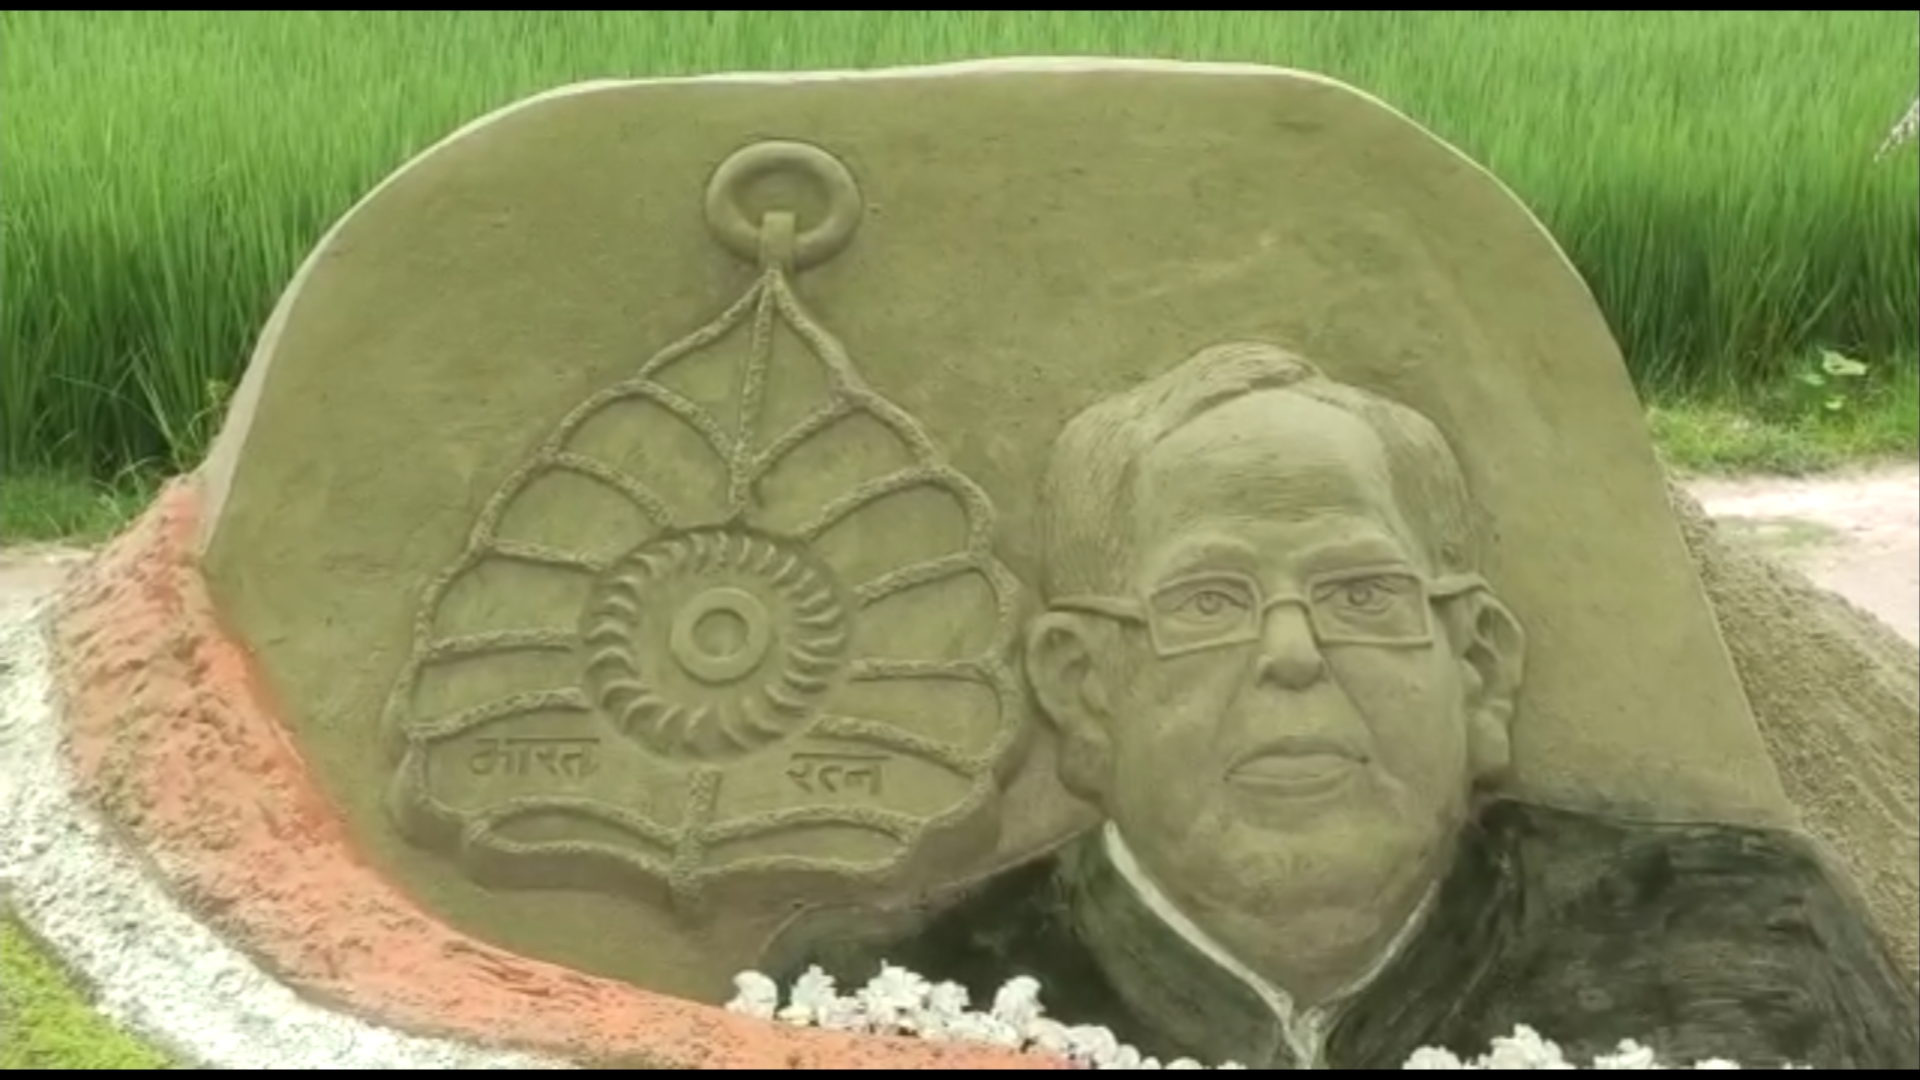 Tribute to Pranab Mukherjee through Sand Art